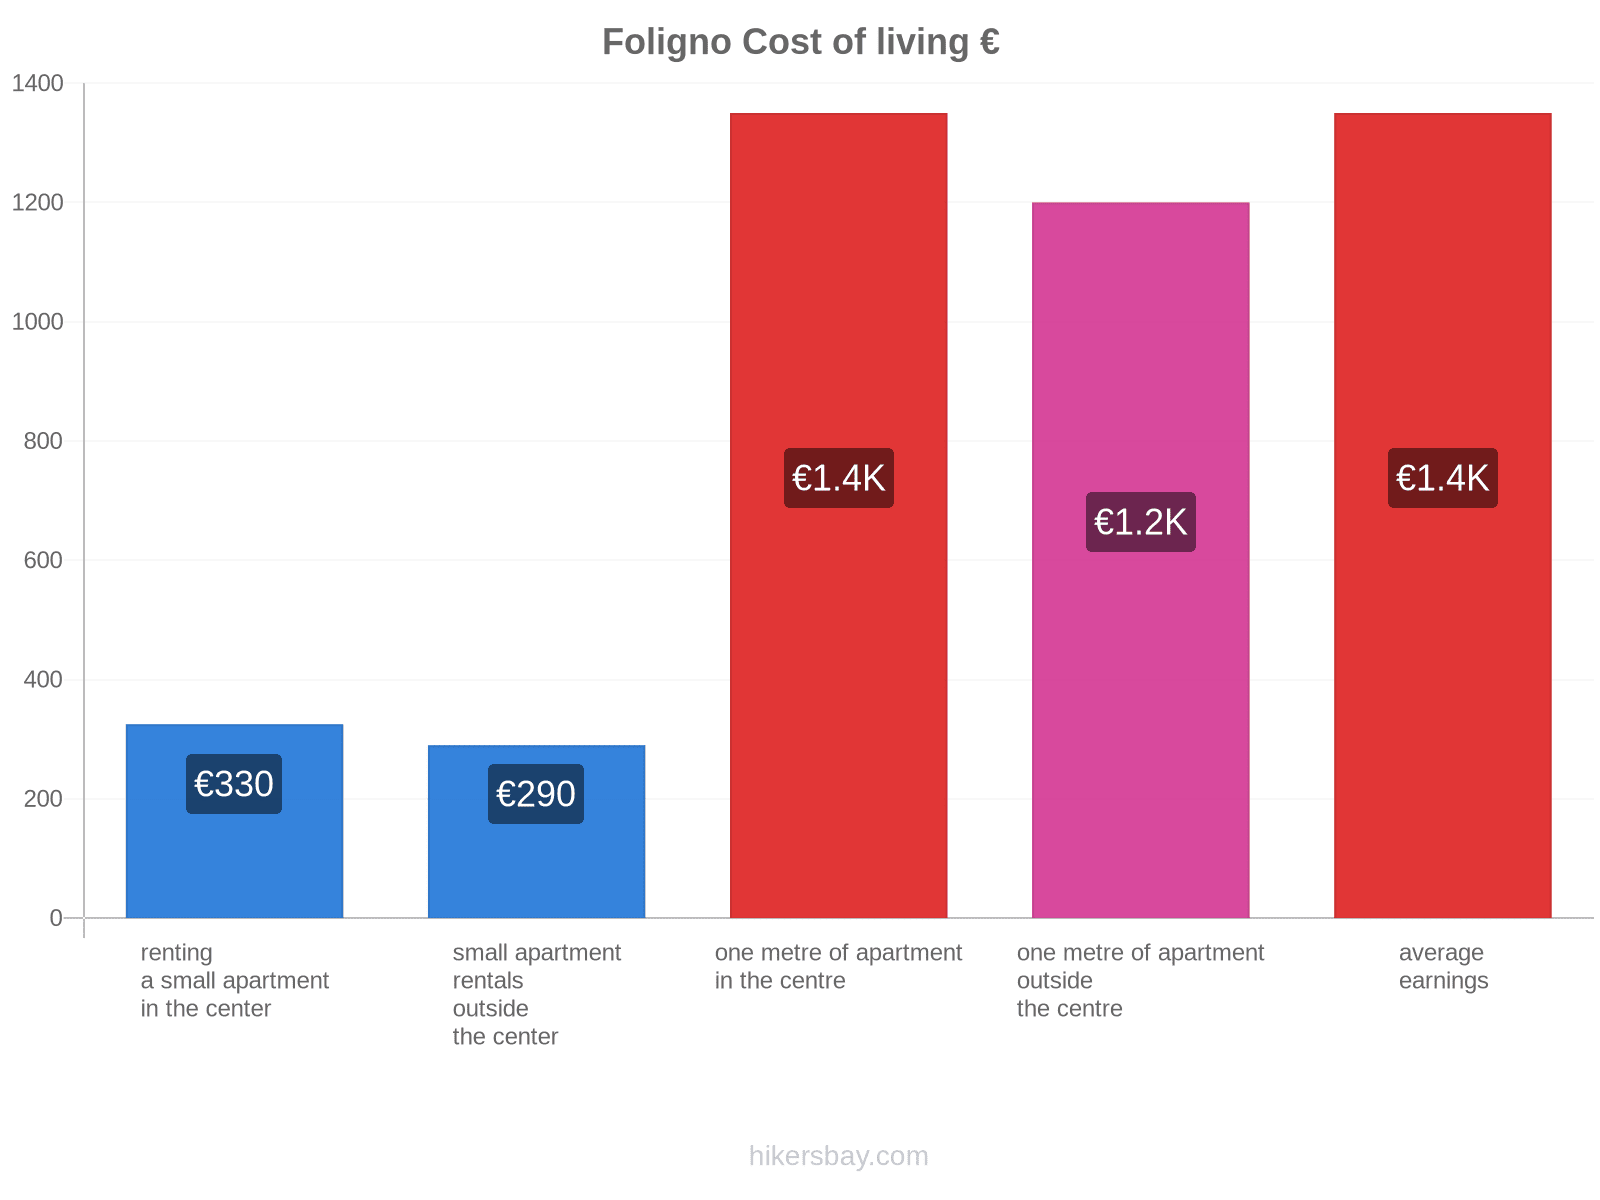 Foligno cost of living hikersbay.com